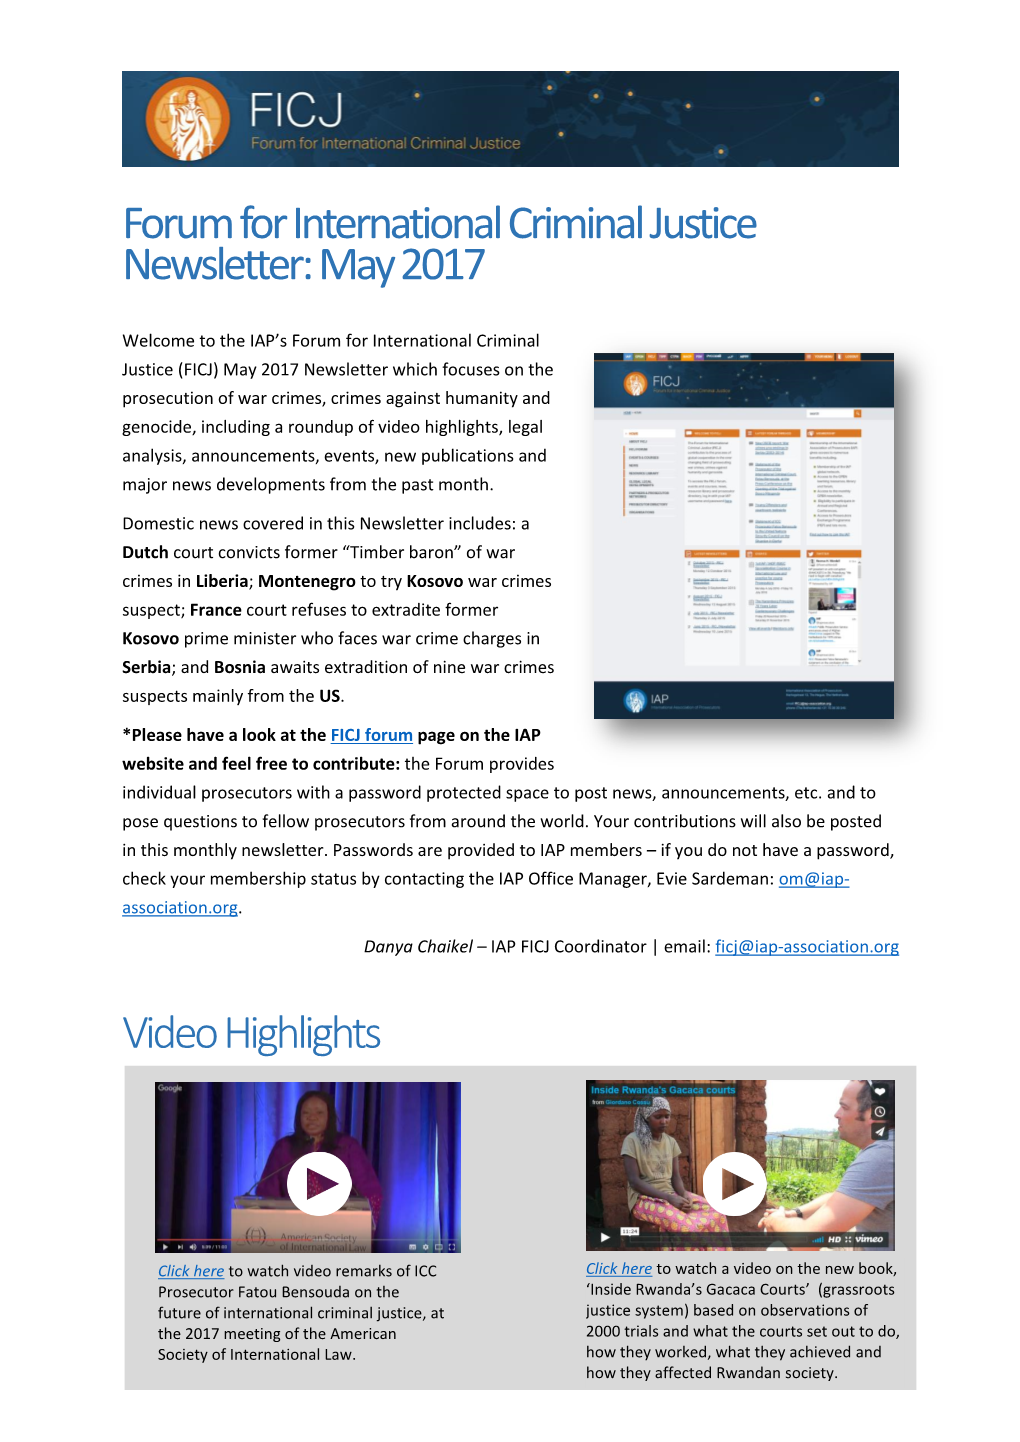 Forum for International Criminal Justice Newsletter: May 2017 Video